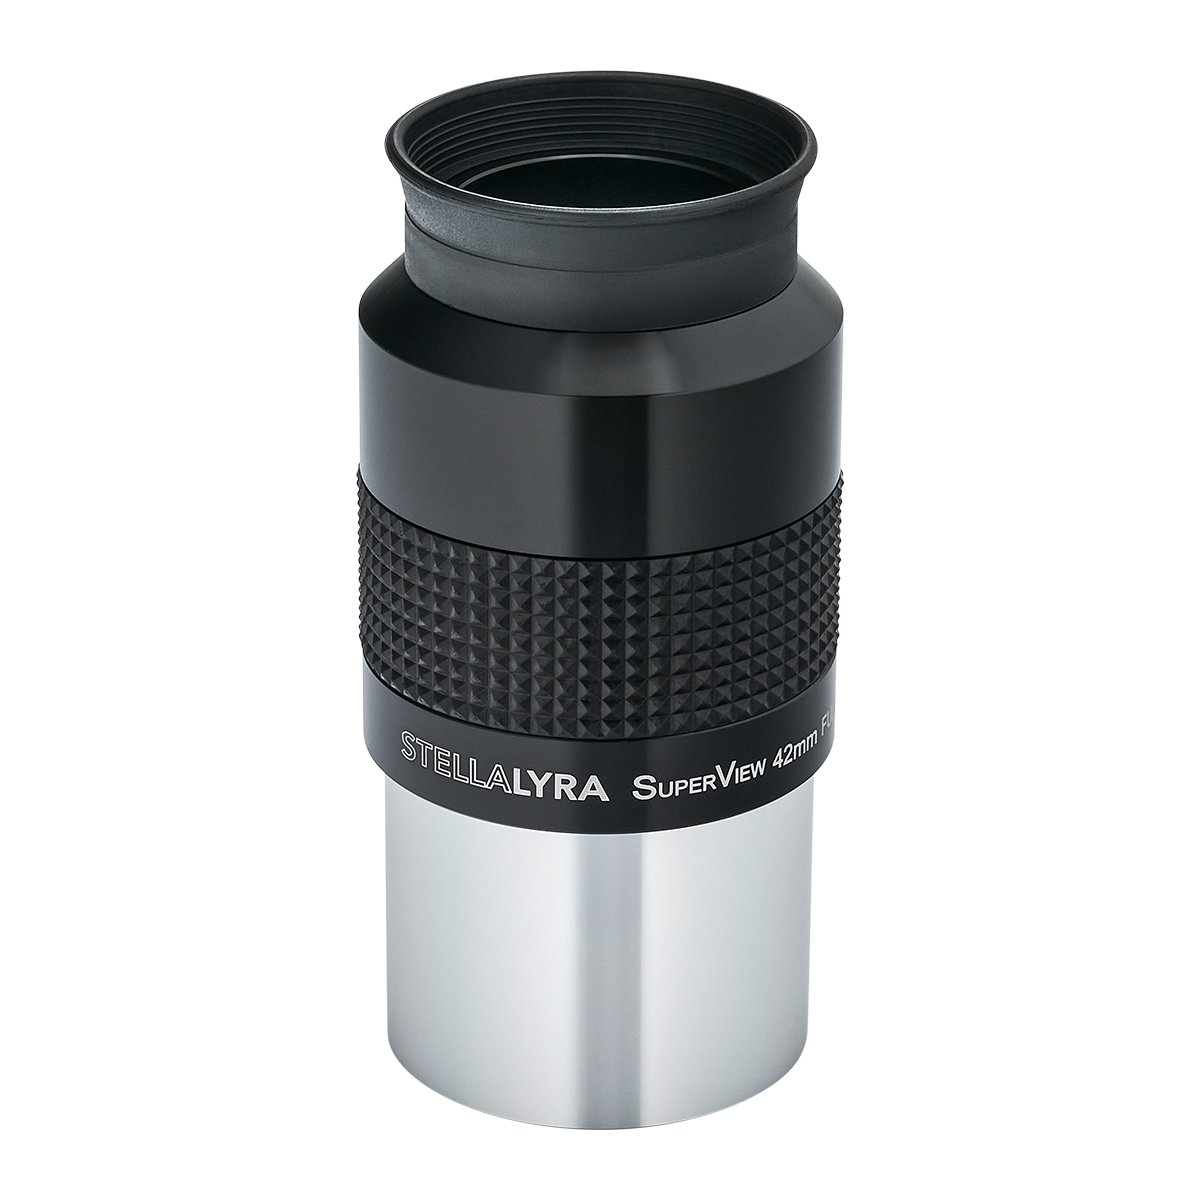 StellaLyra 42mm 2'' SuperView Eyepiece